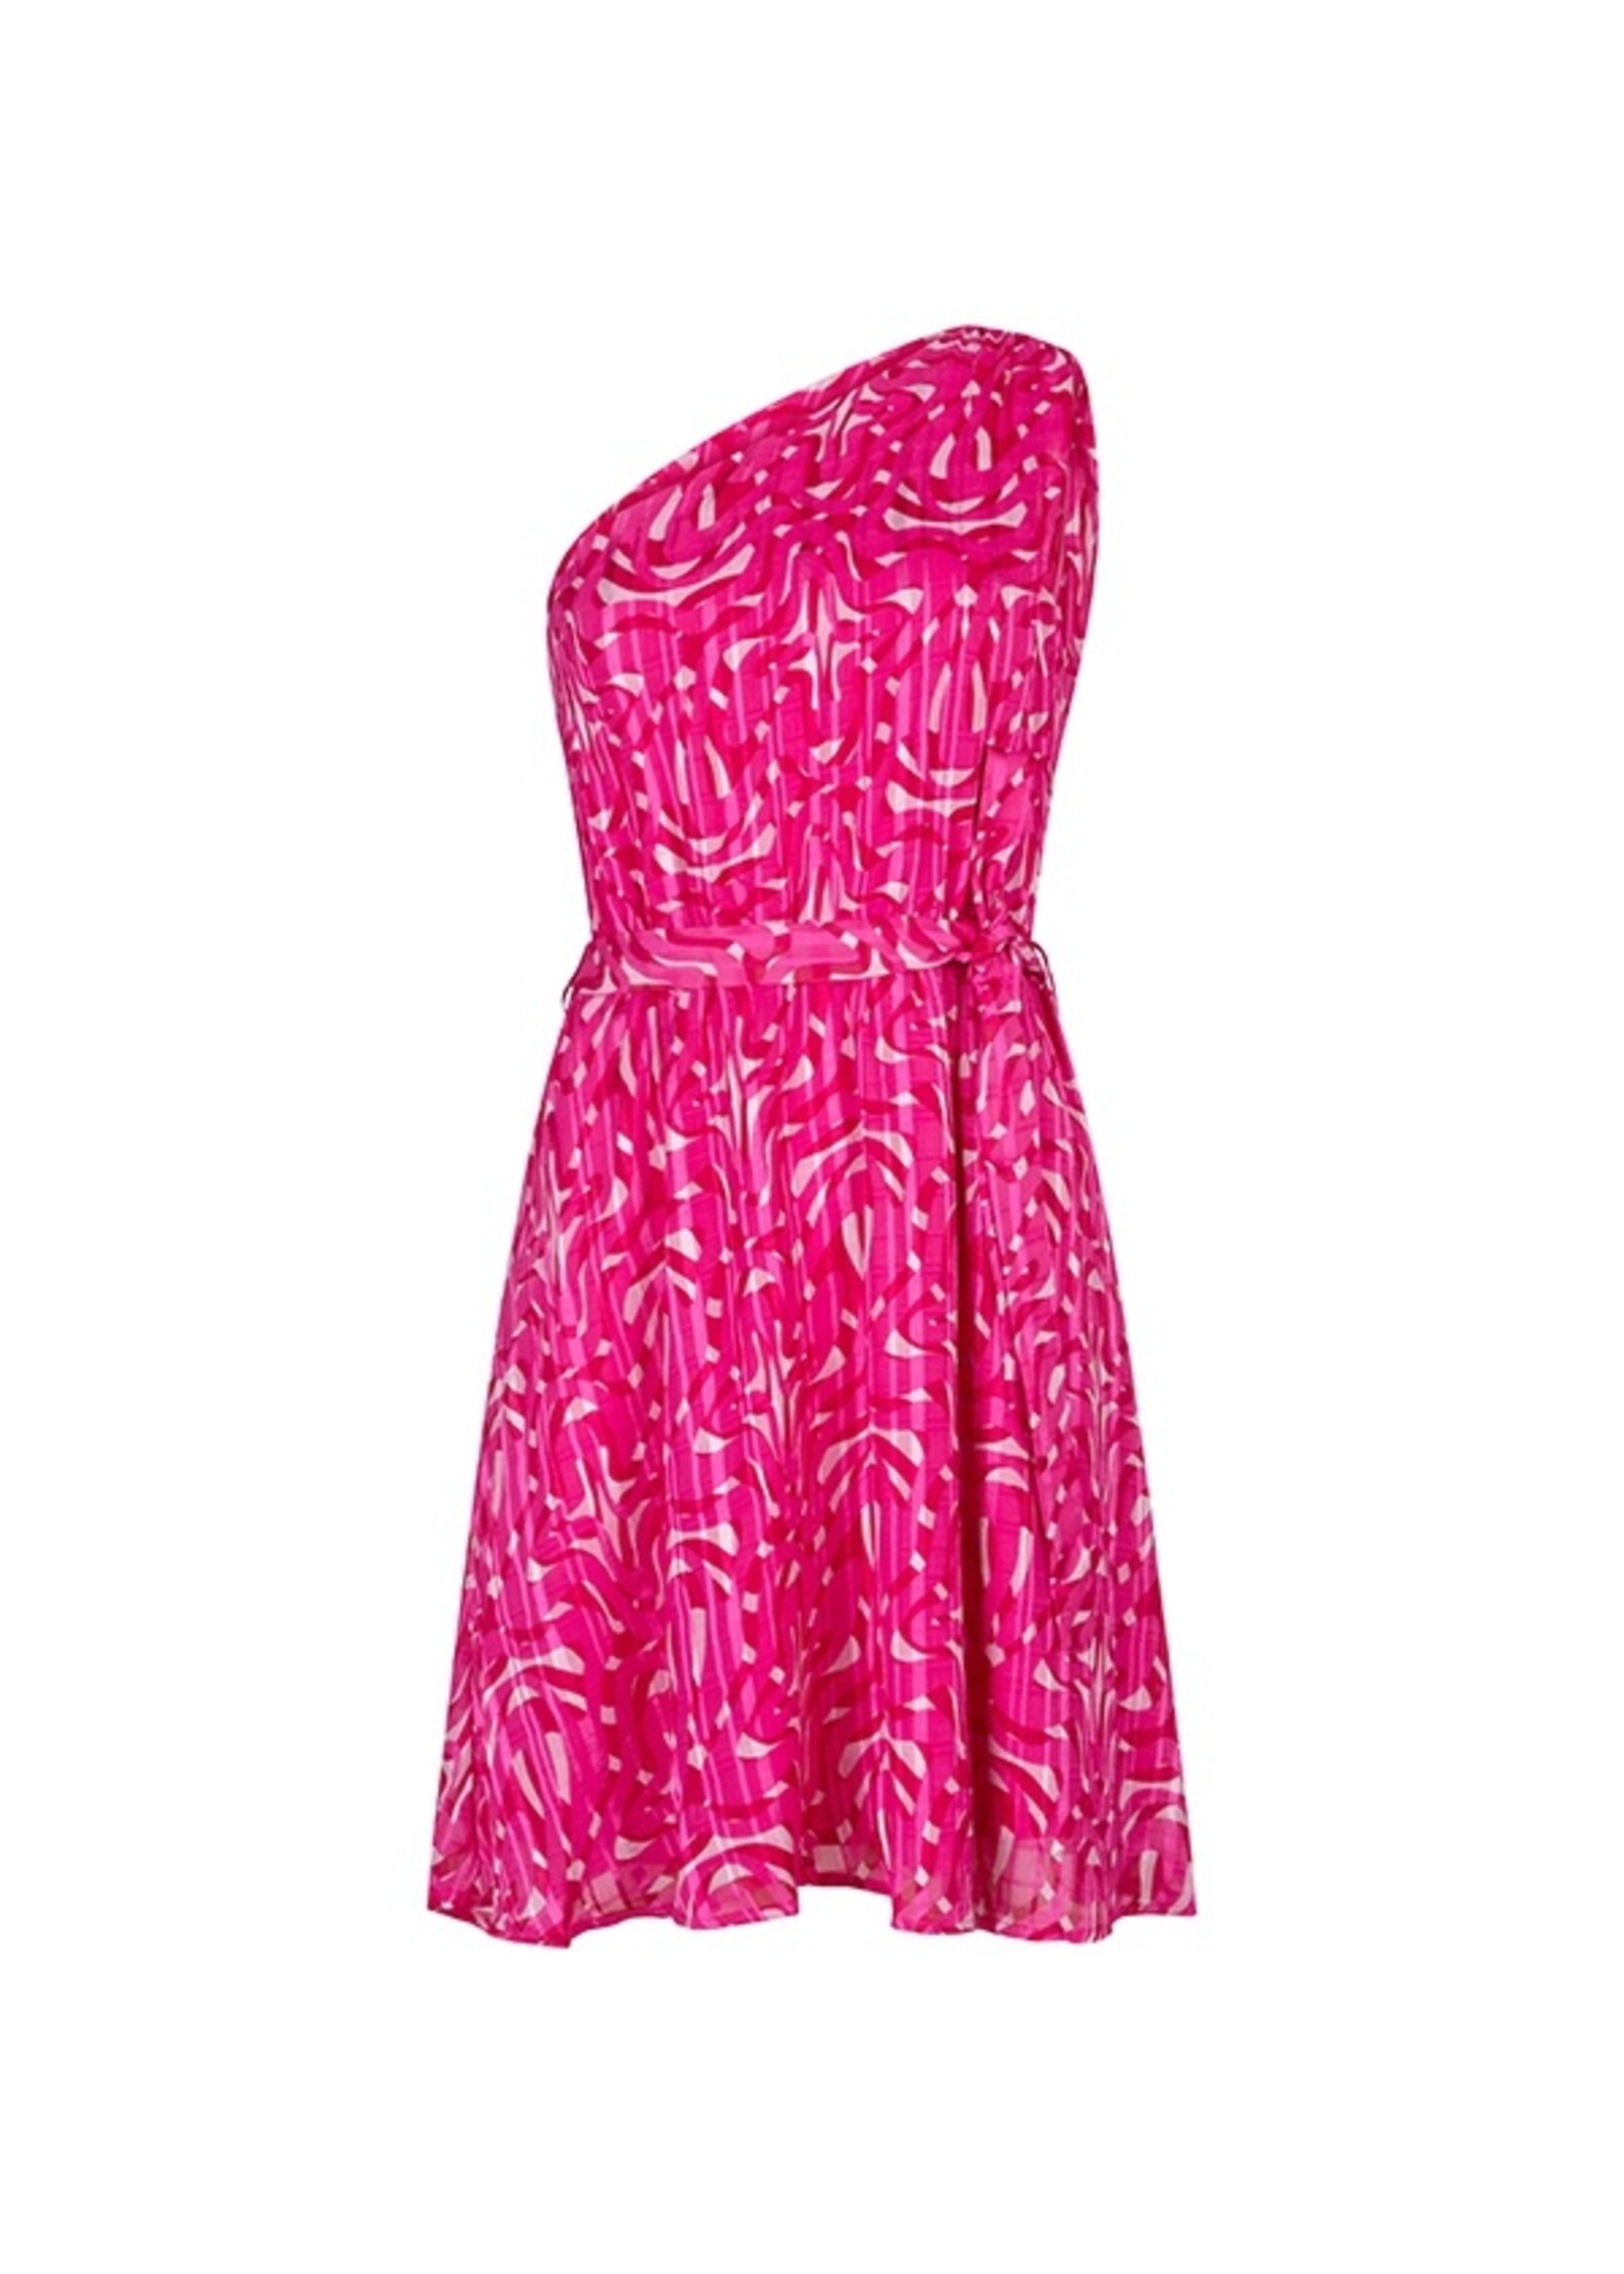 LOFTY MANNER Dress Anaya Pink Swirl Print